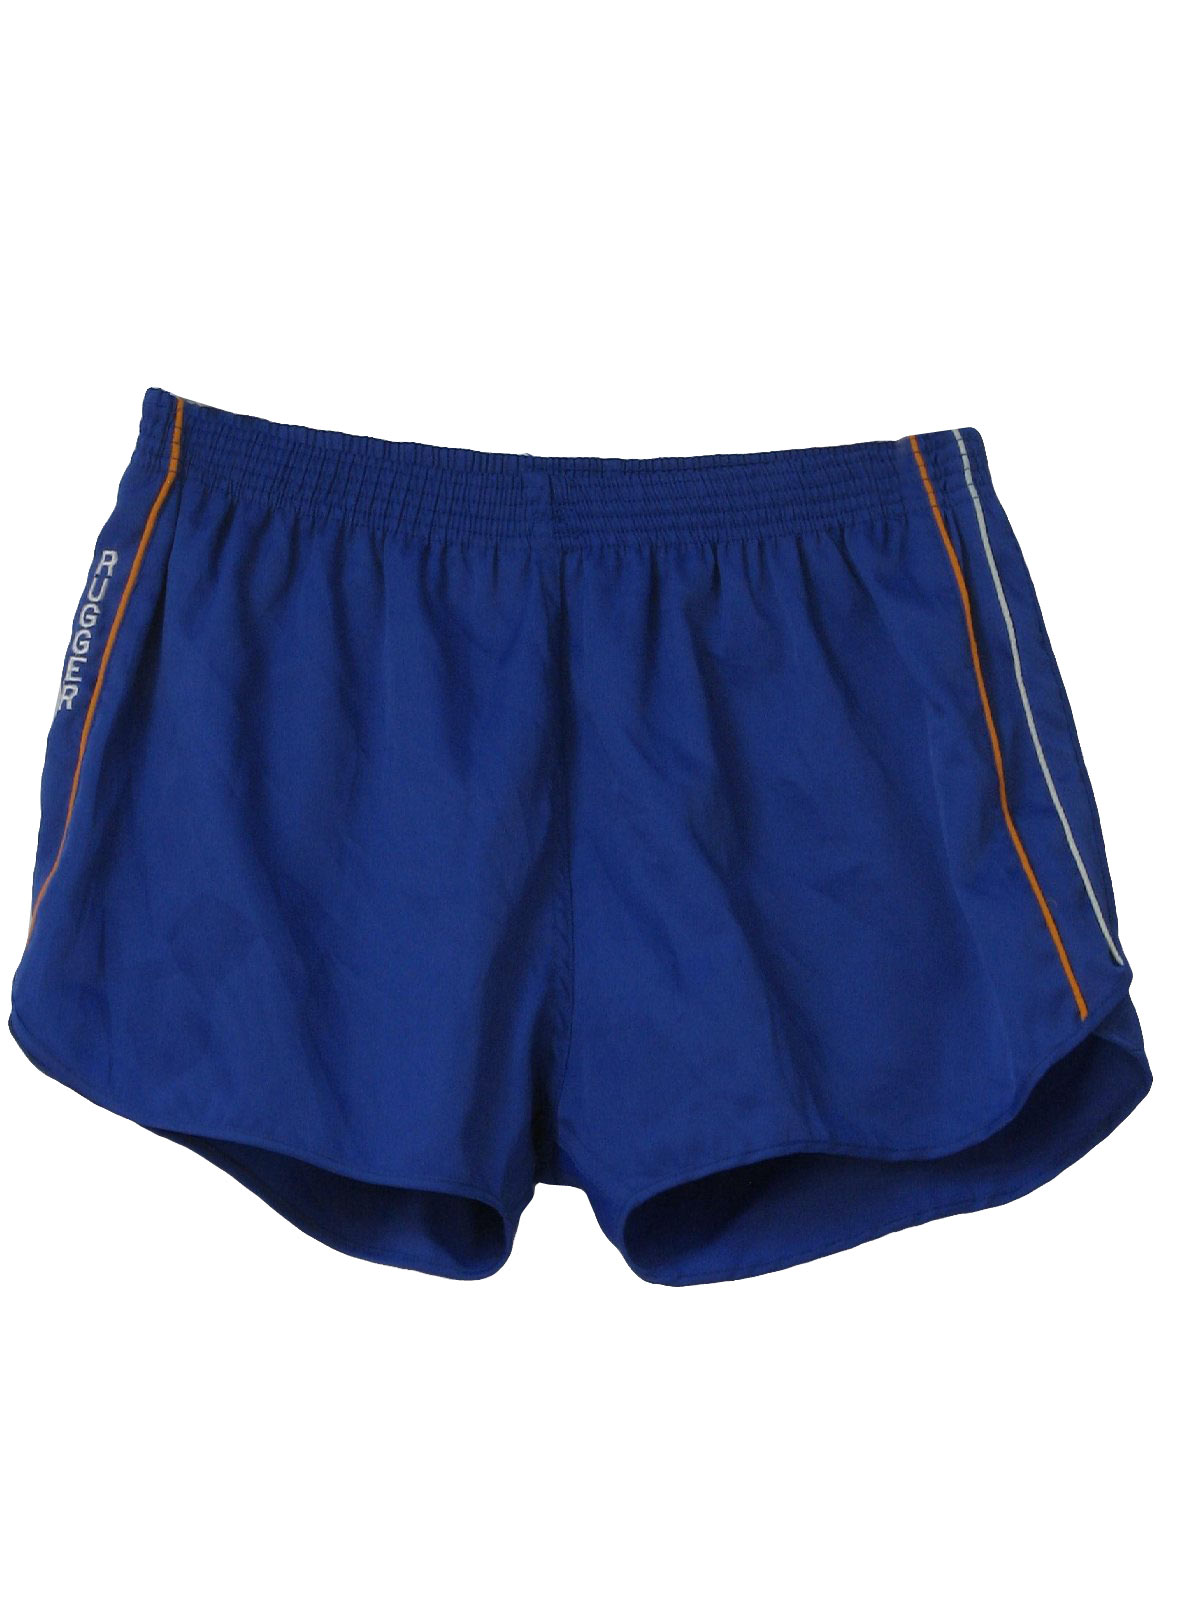 Eighties Vintage Shorts: 80s -Gant- Mens blue nylon high elastic waist ...